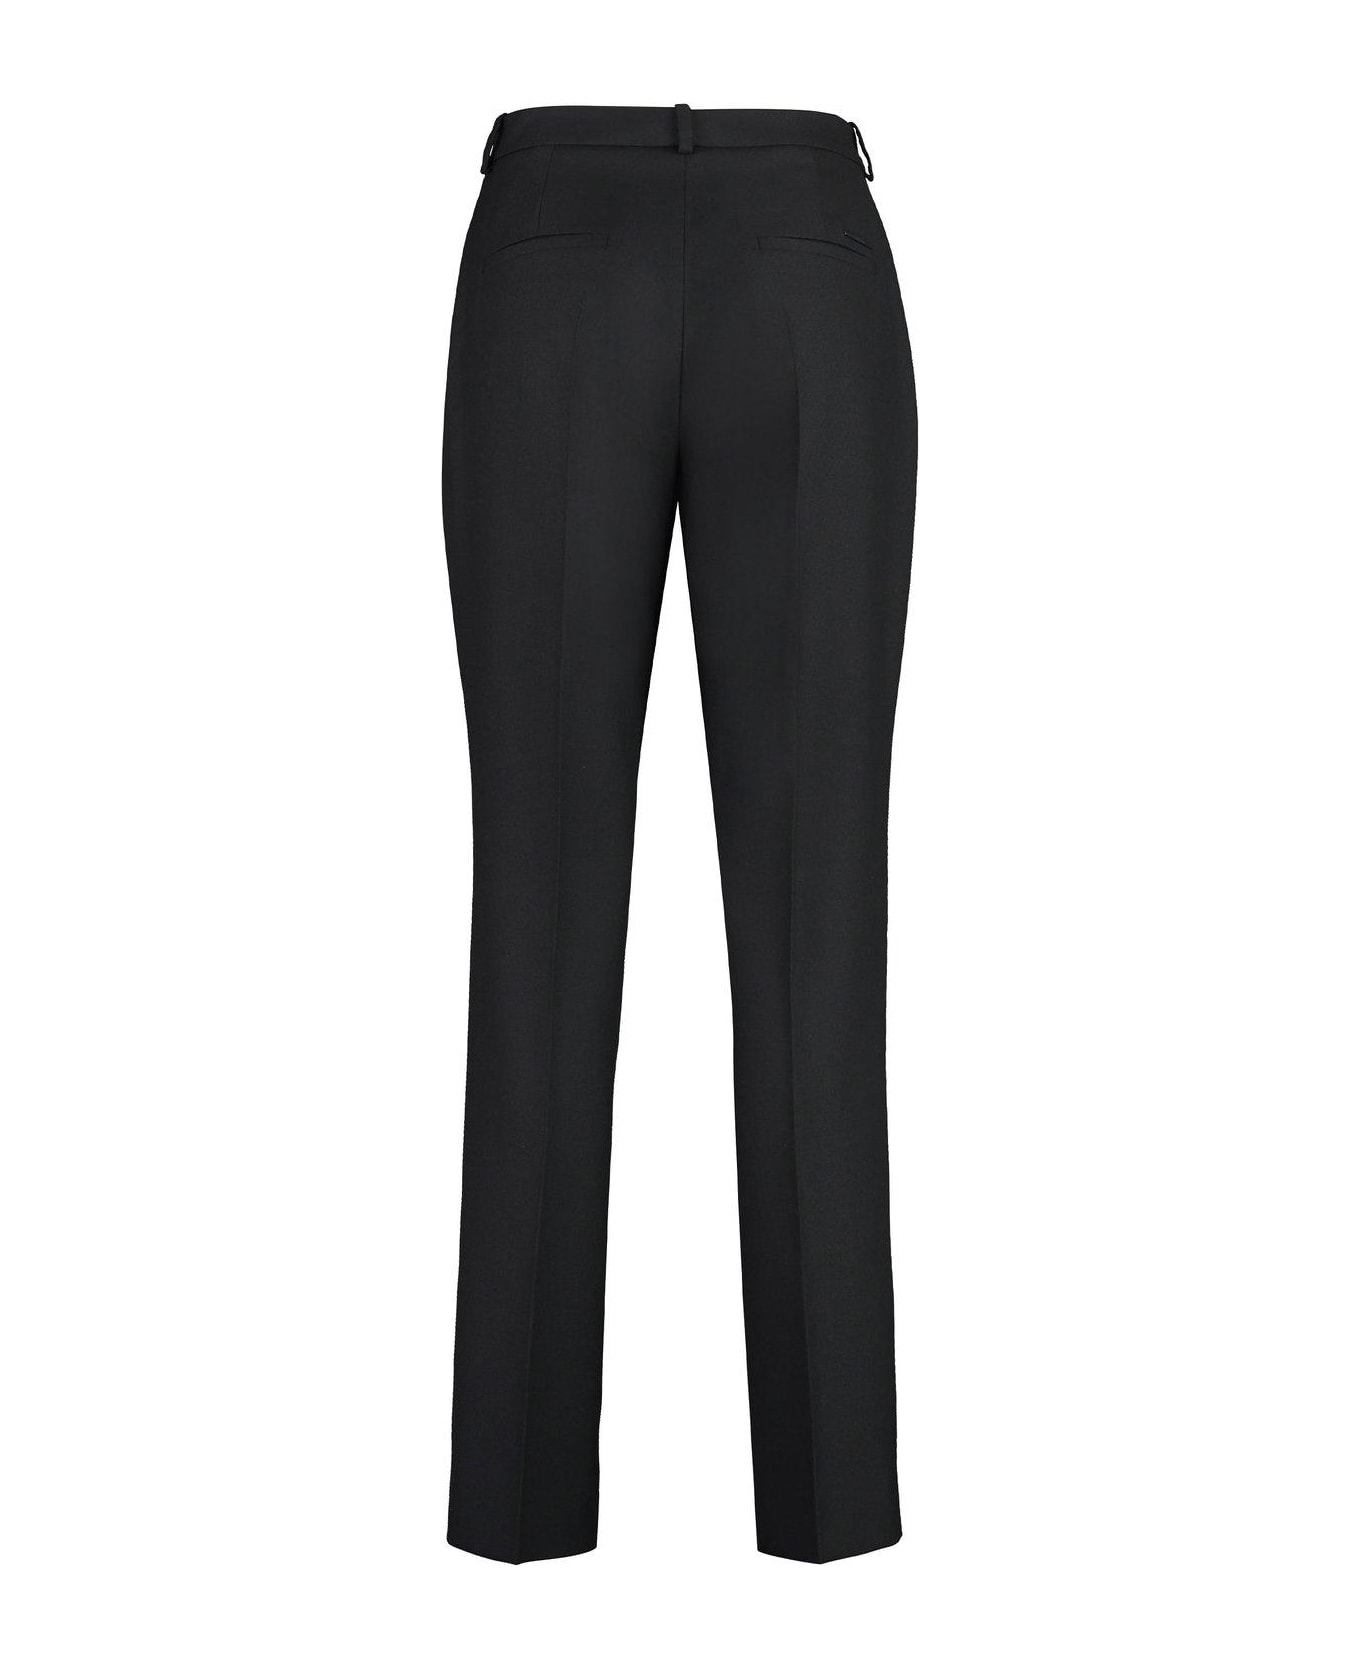 Calvin Klein Pleat Tailored Trousers - Nero ボトムス